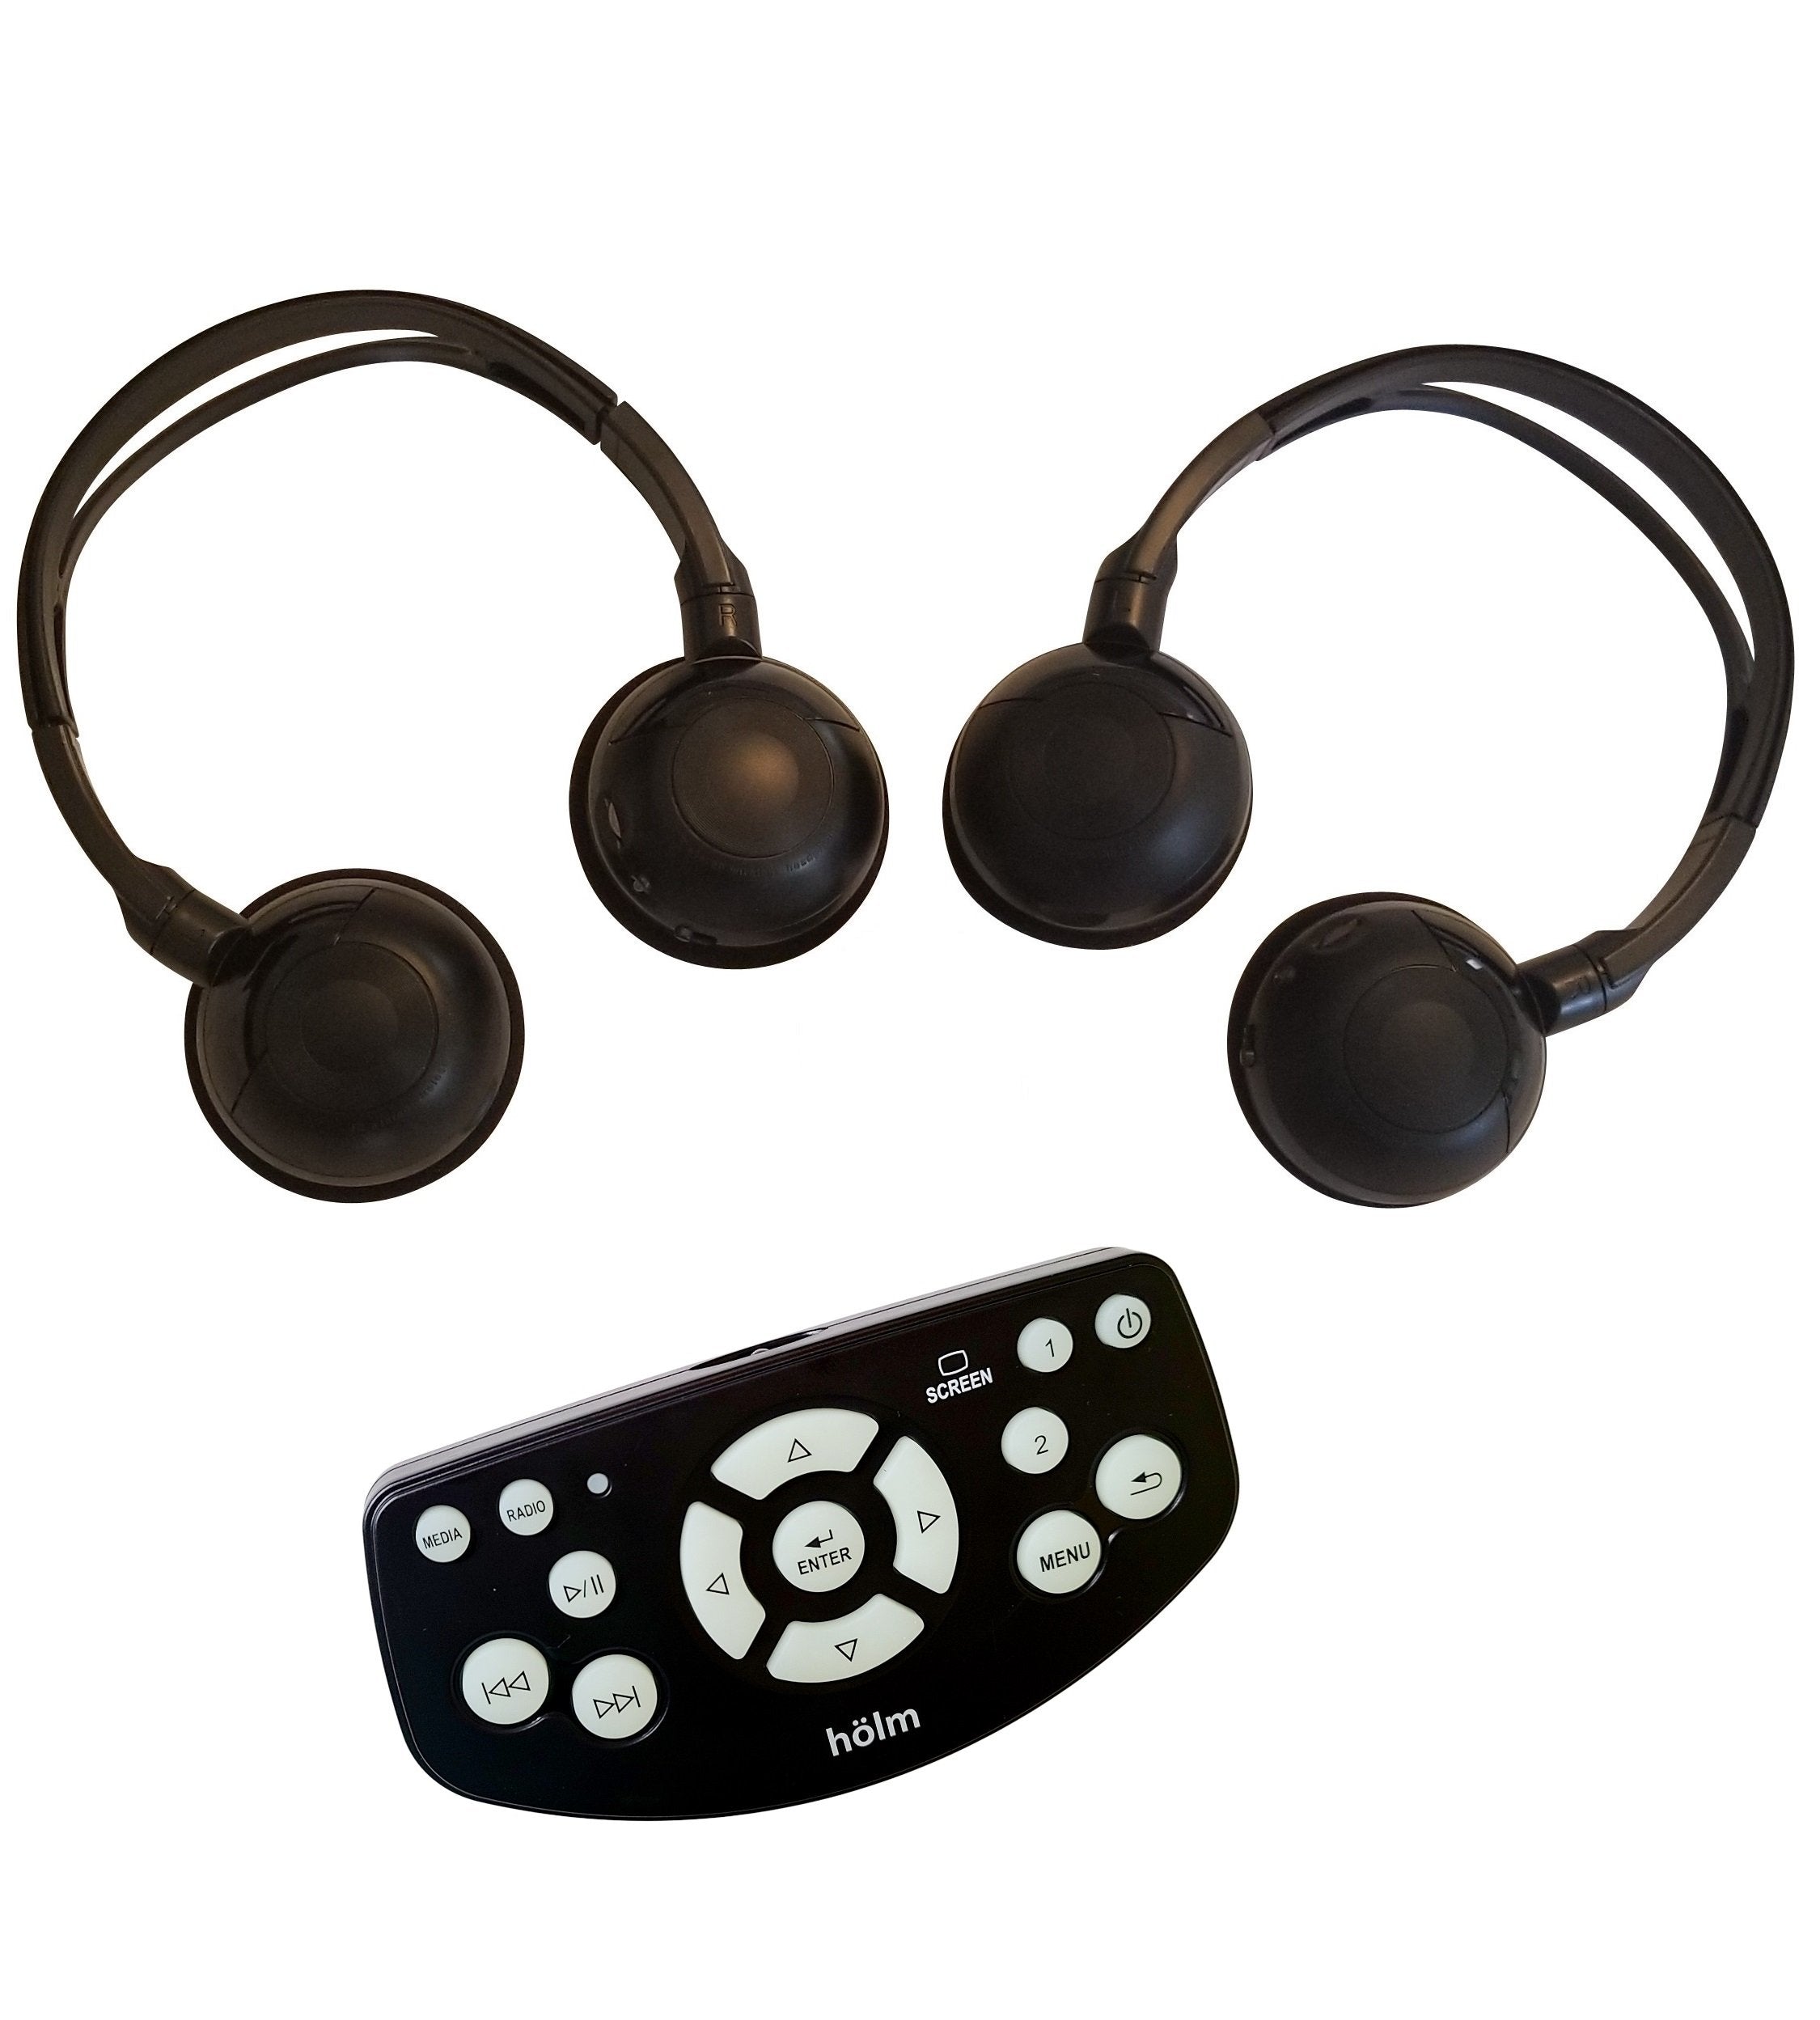 2016 GMC Acadia BluRay DVD Remote And Wireless Headphones